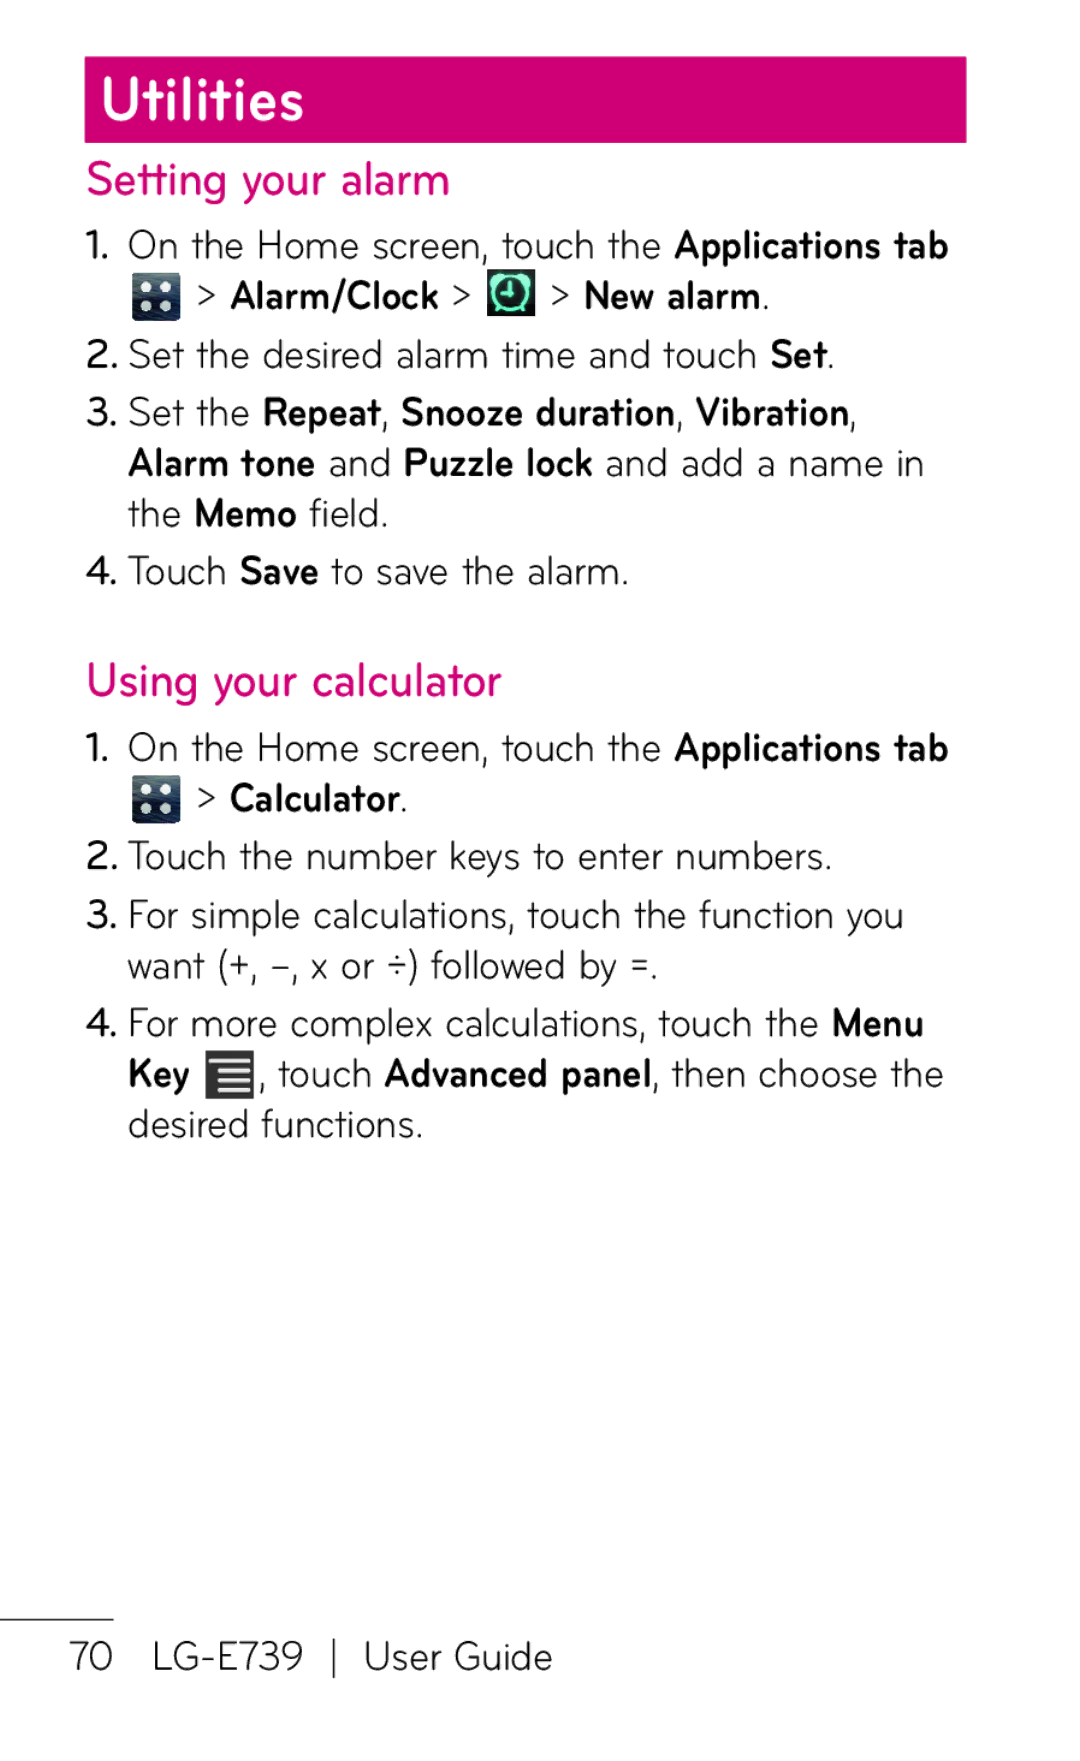 LG Electronics E739 manual Utilities, Setting your alarm, Using your calculator, Alarm/Clock New alarm, Calculator 